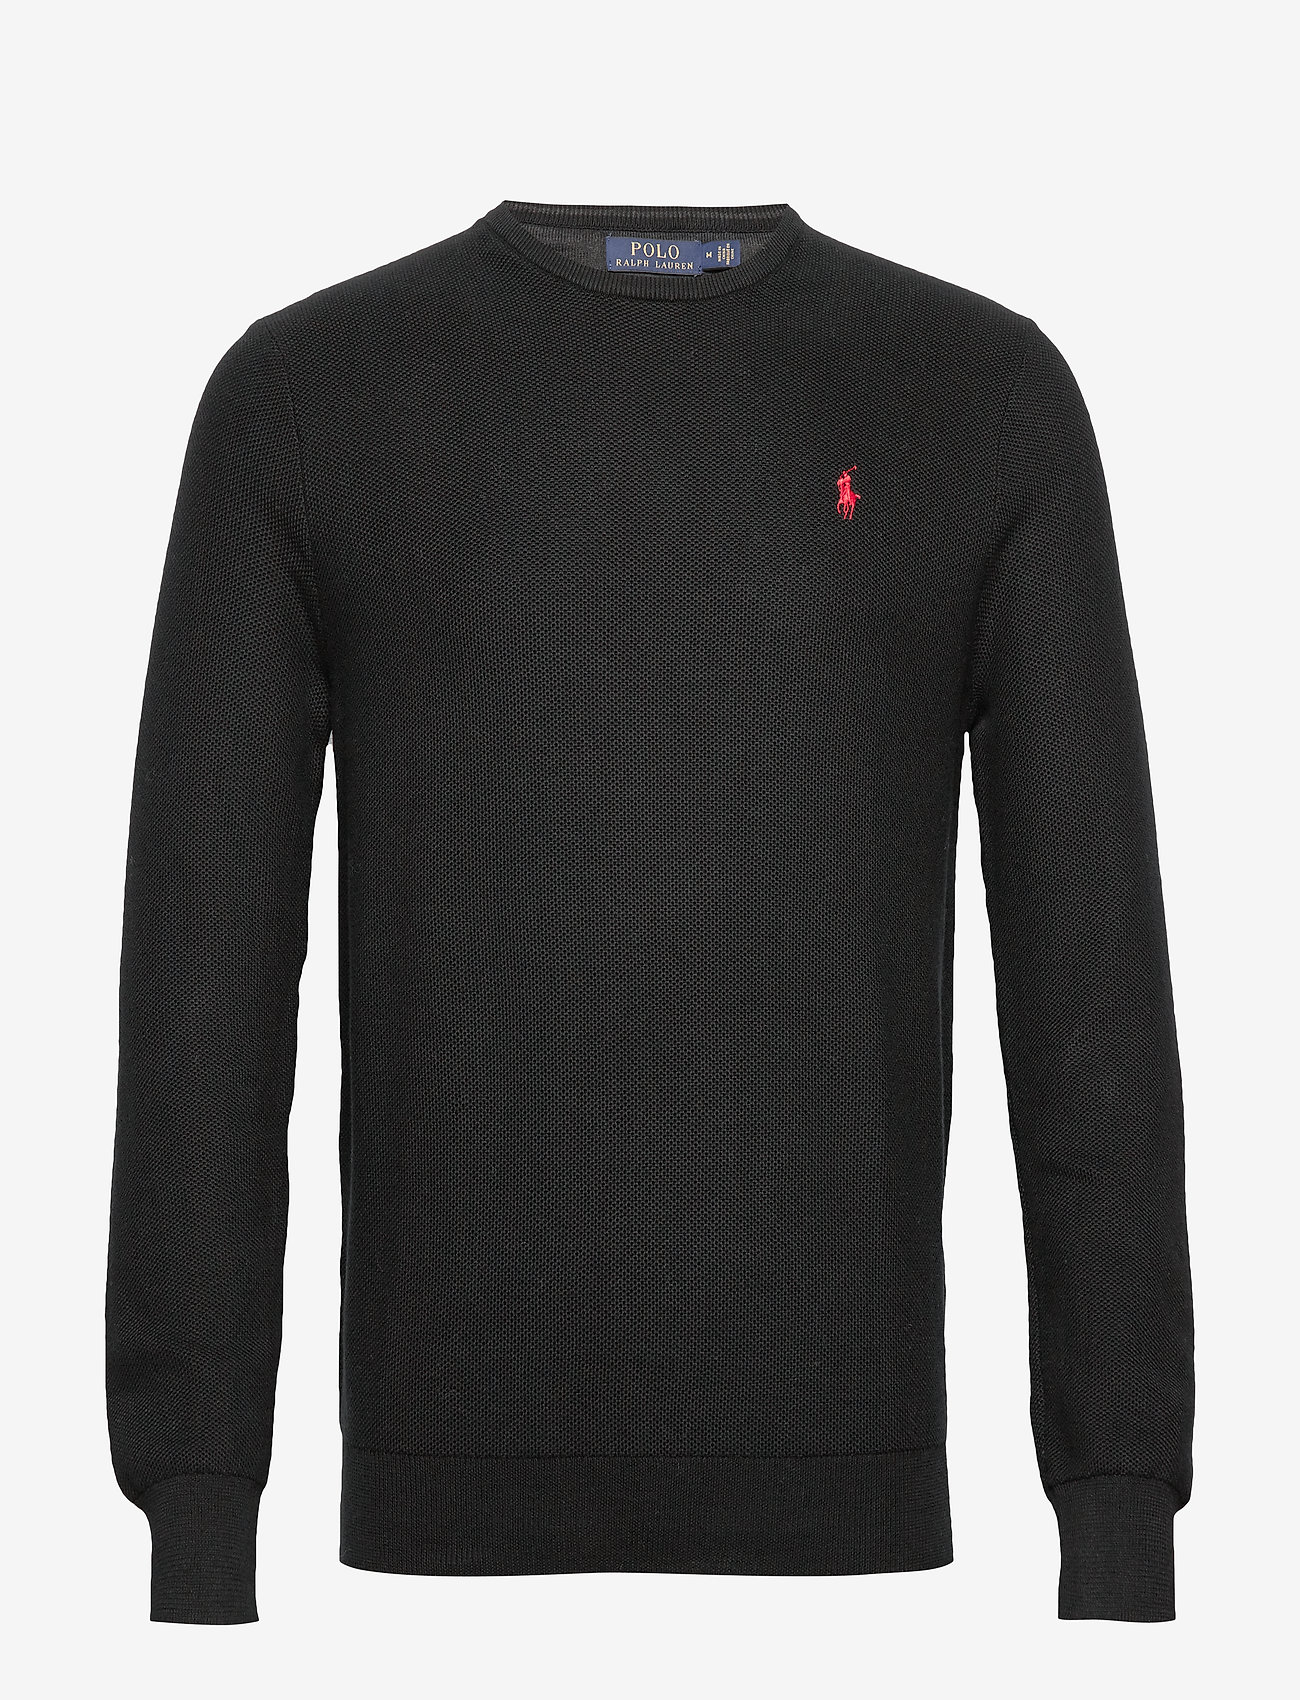 Cotton Crewneck Sweater (Polo Black 